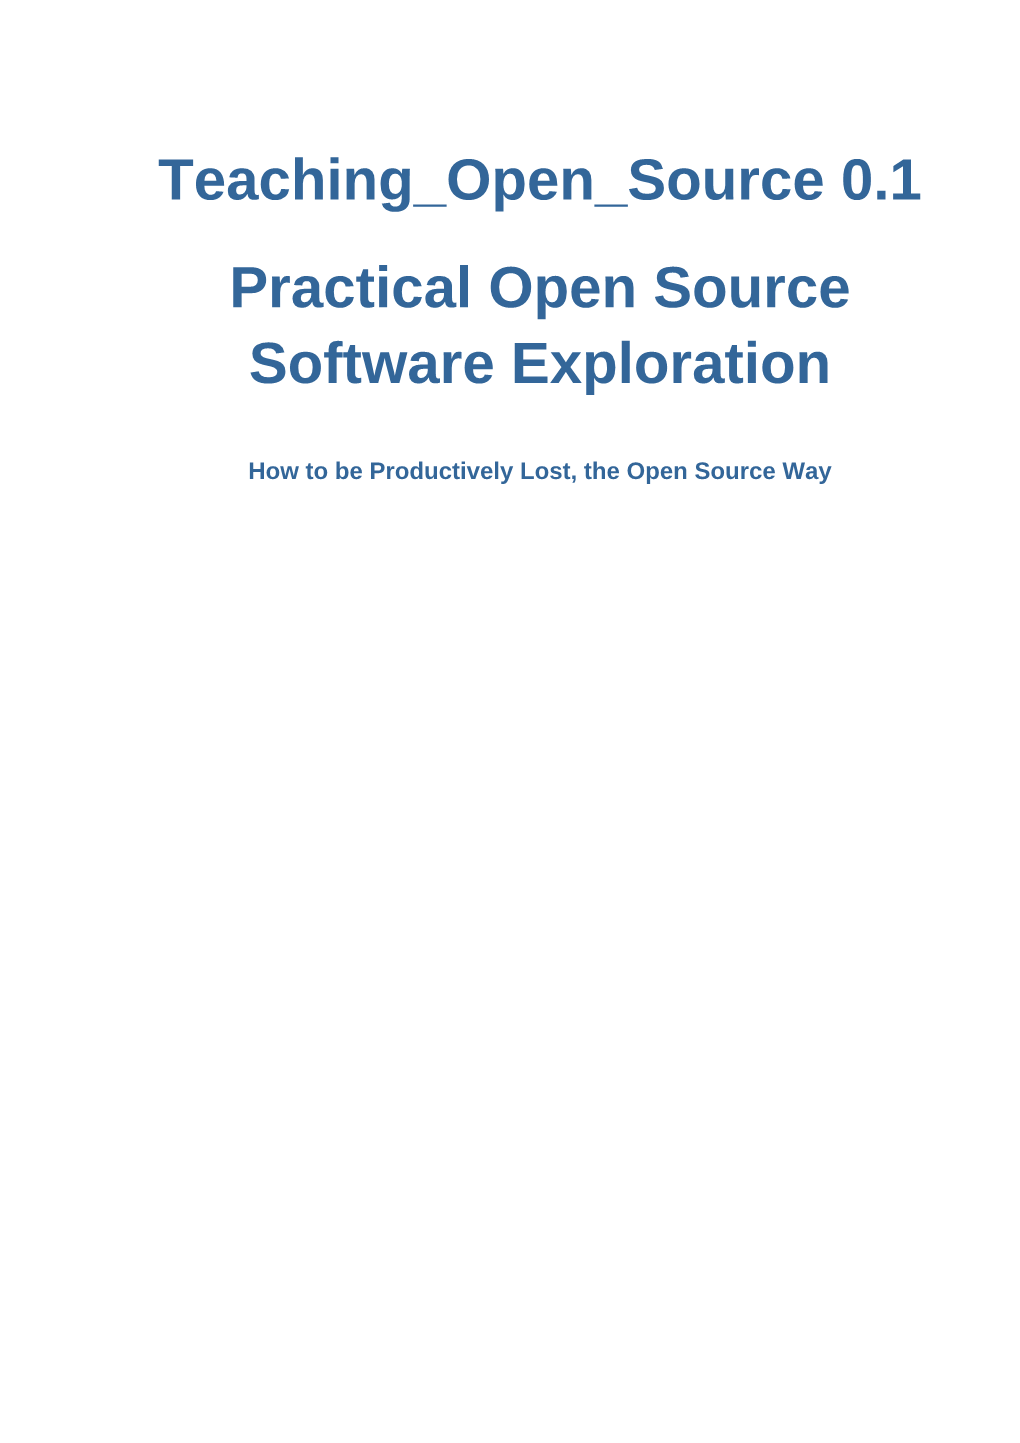 Practical Open Source Software Exploration